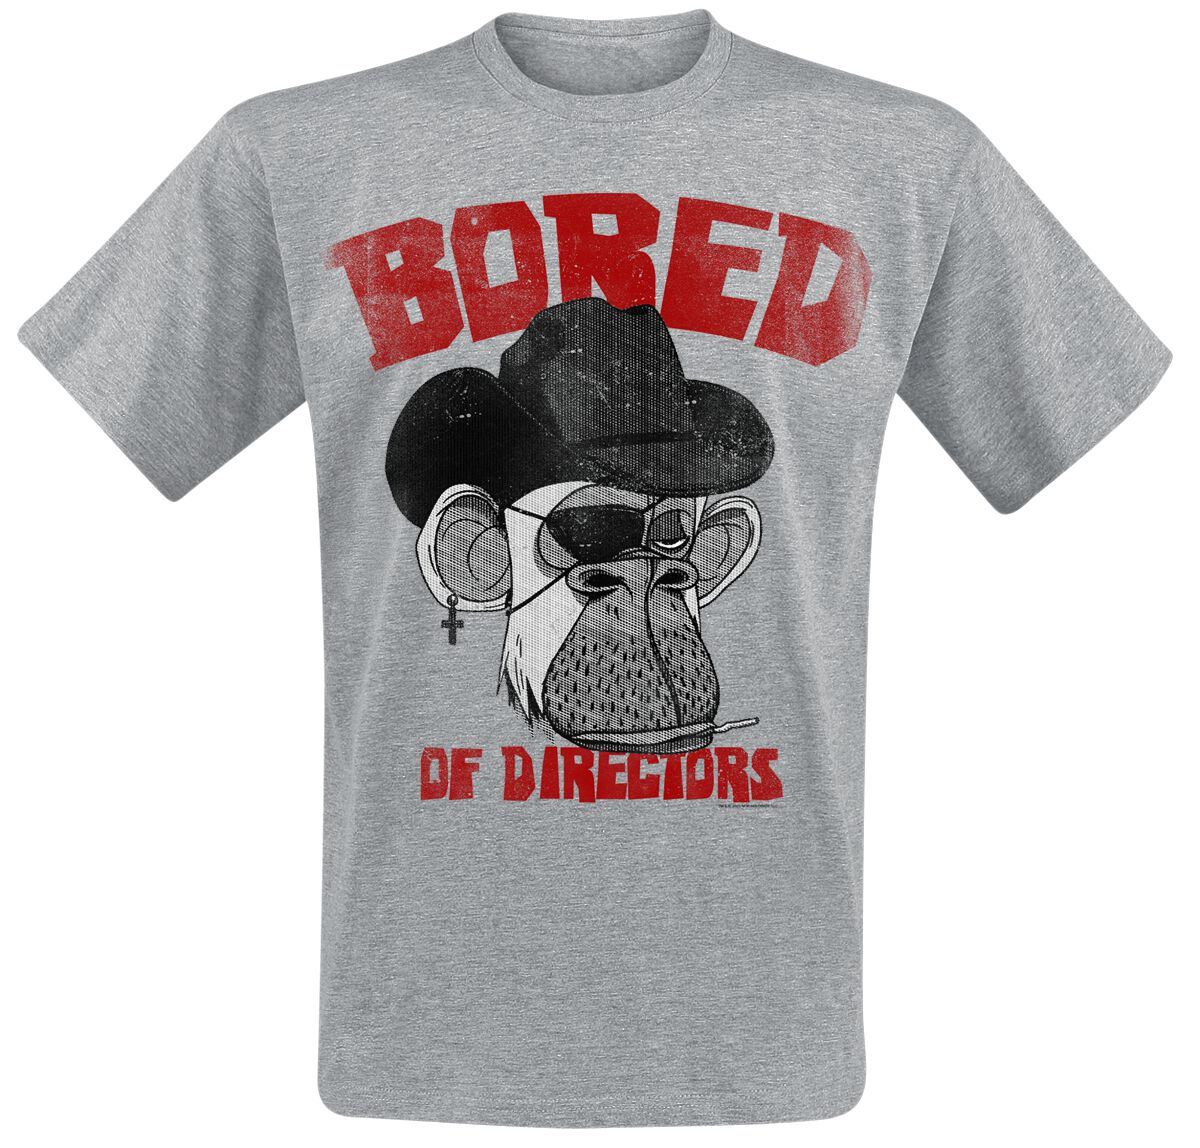 bored of directors t-shirt - clint apewood vintage - s bis xxl - fÃ¼r mÃ¤nner - grÃ¶ÃŸe m - - emp exklusives merchandise! grau